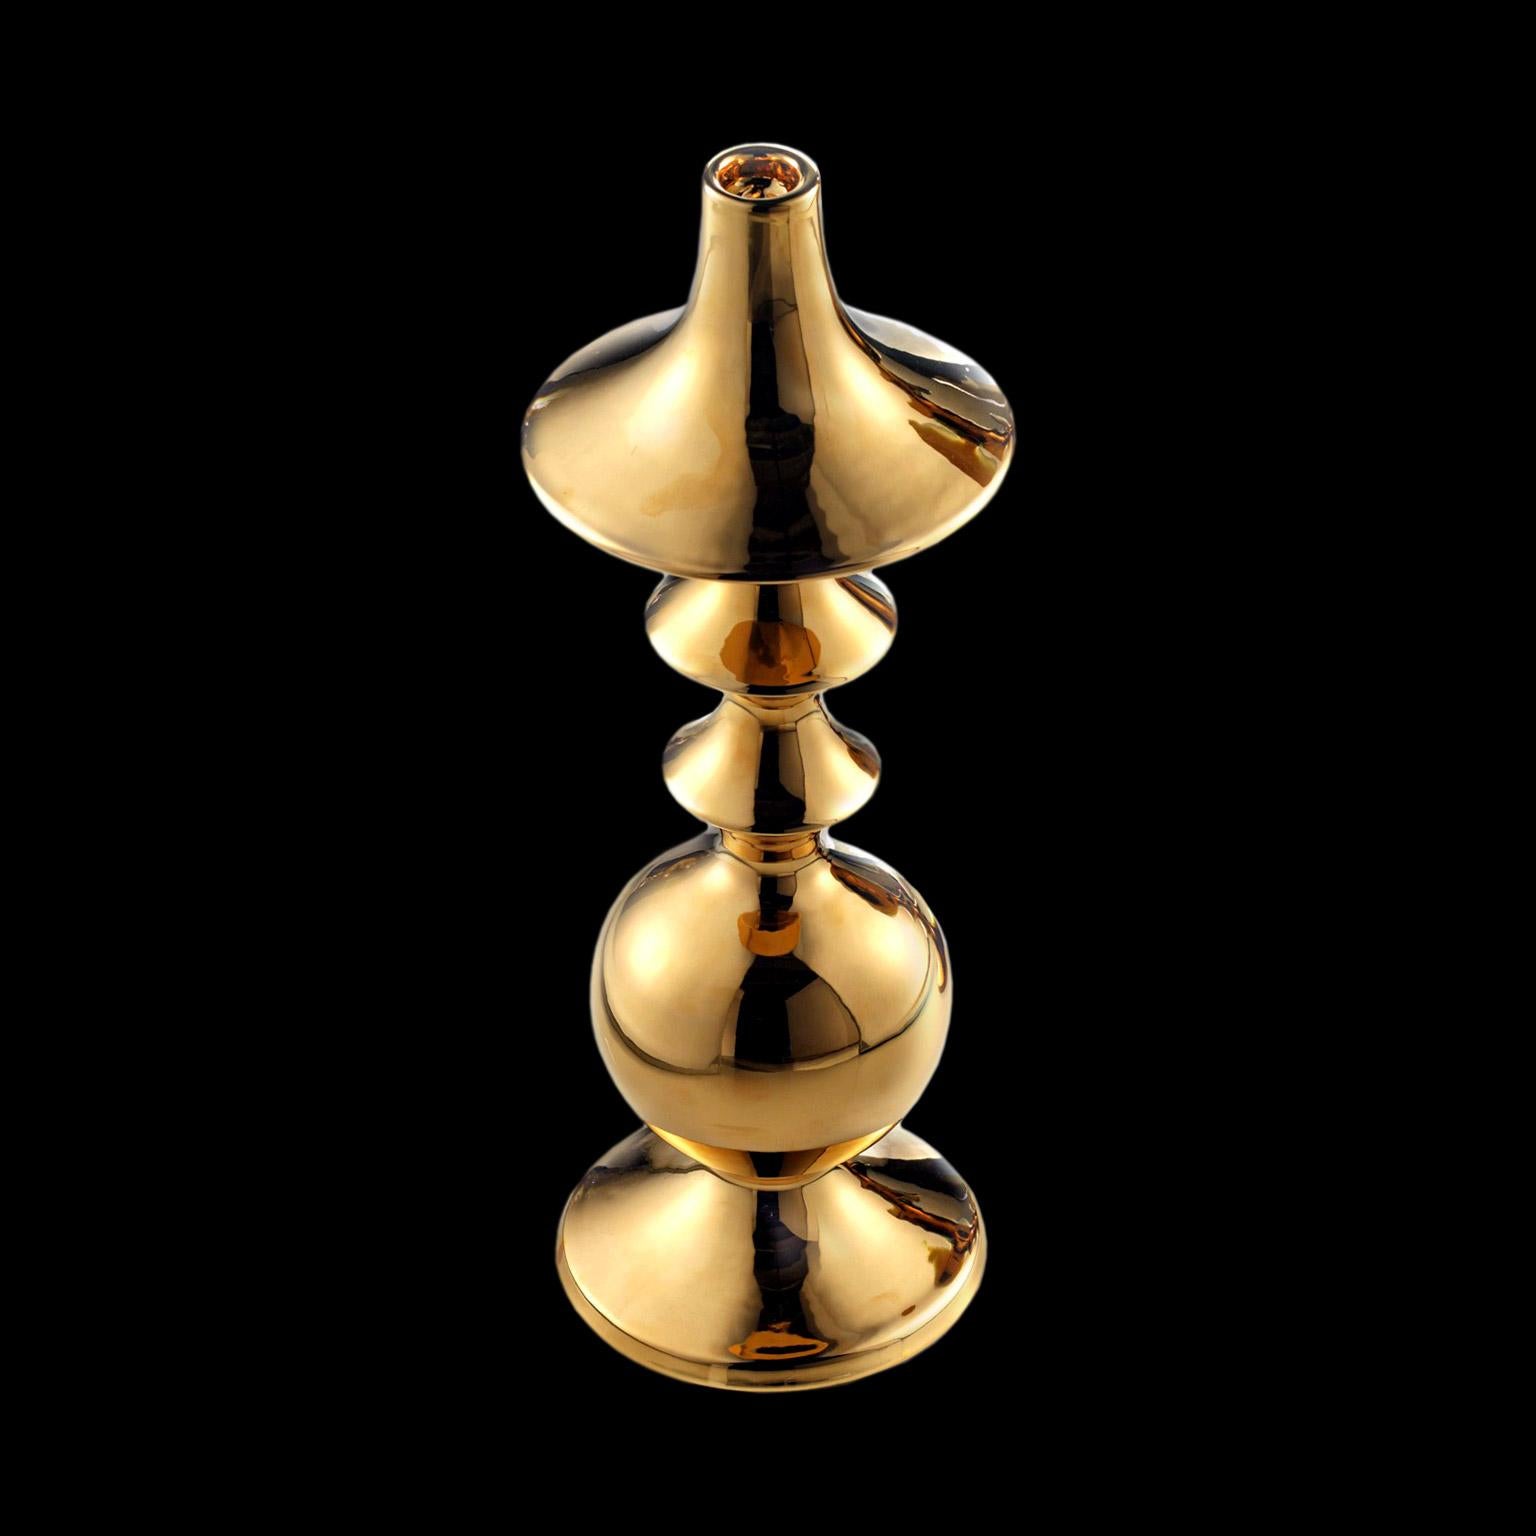 Ceramic vase BRIX hand-finished in 24-karat gold

code CA030
measures: H. 50.0 cm. - Dm. 18.0 cm.